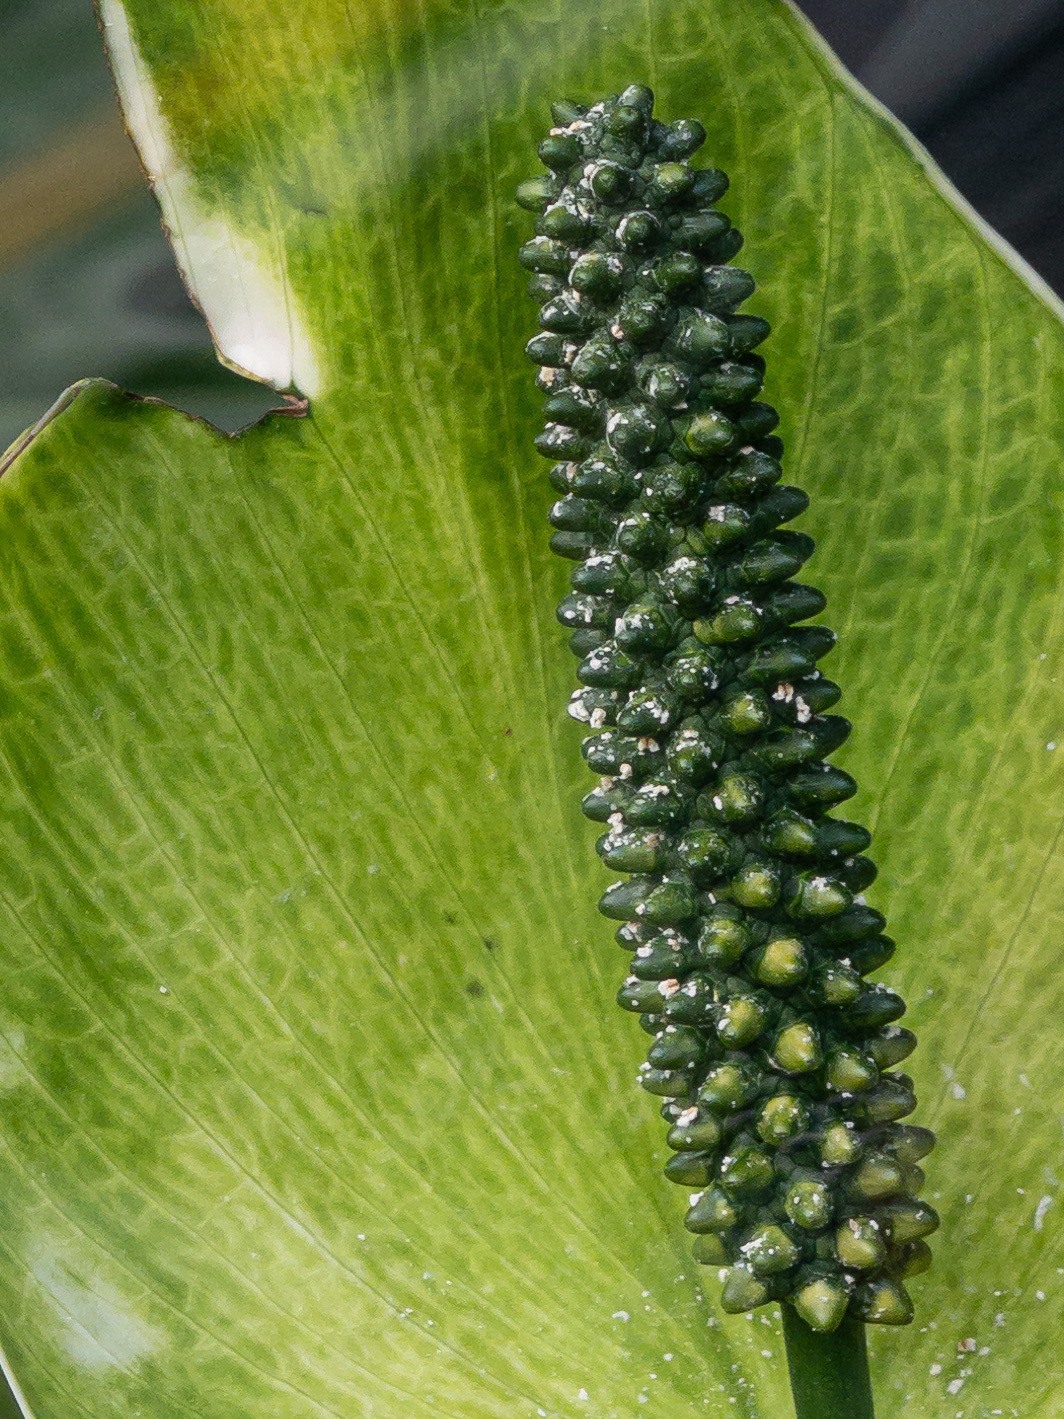 Closeup of a peace plant flower stamen.